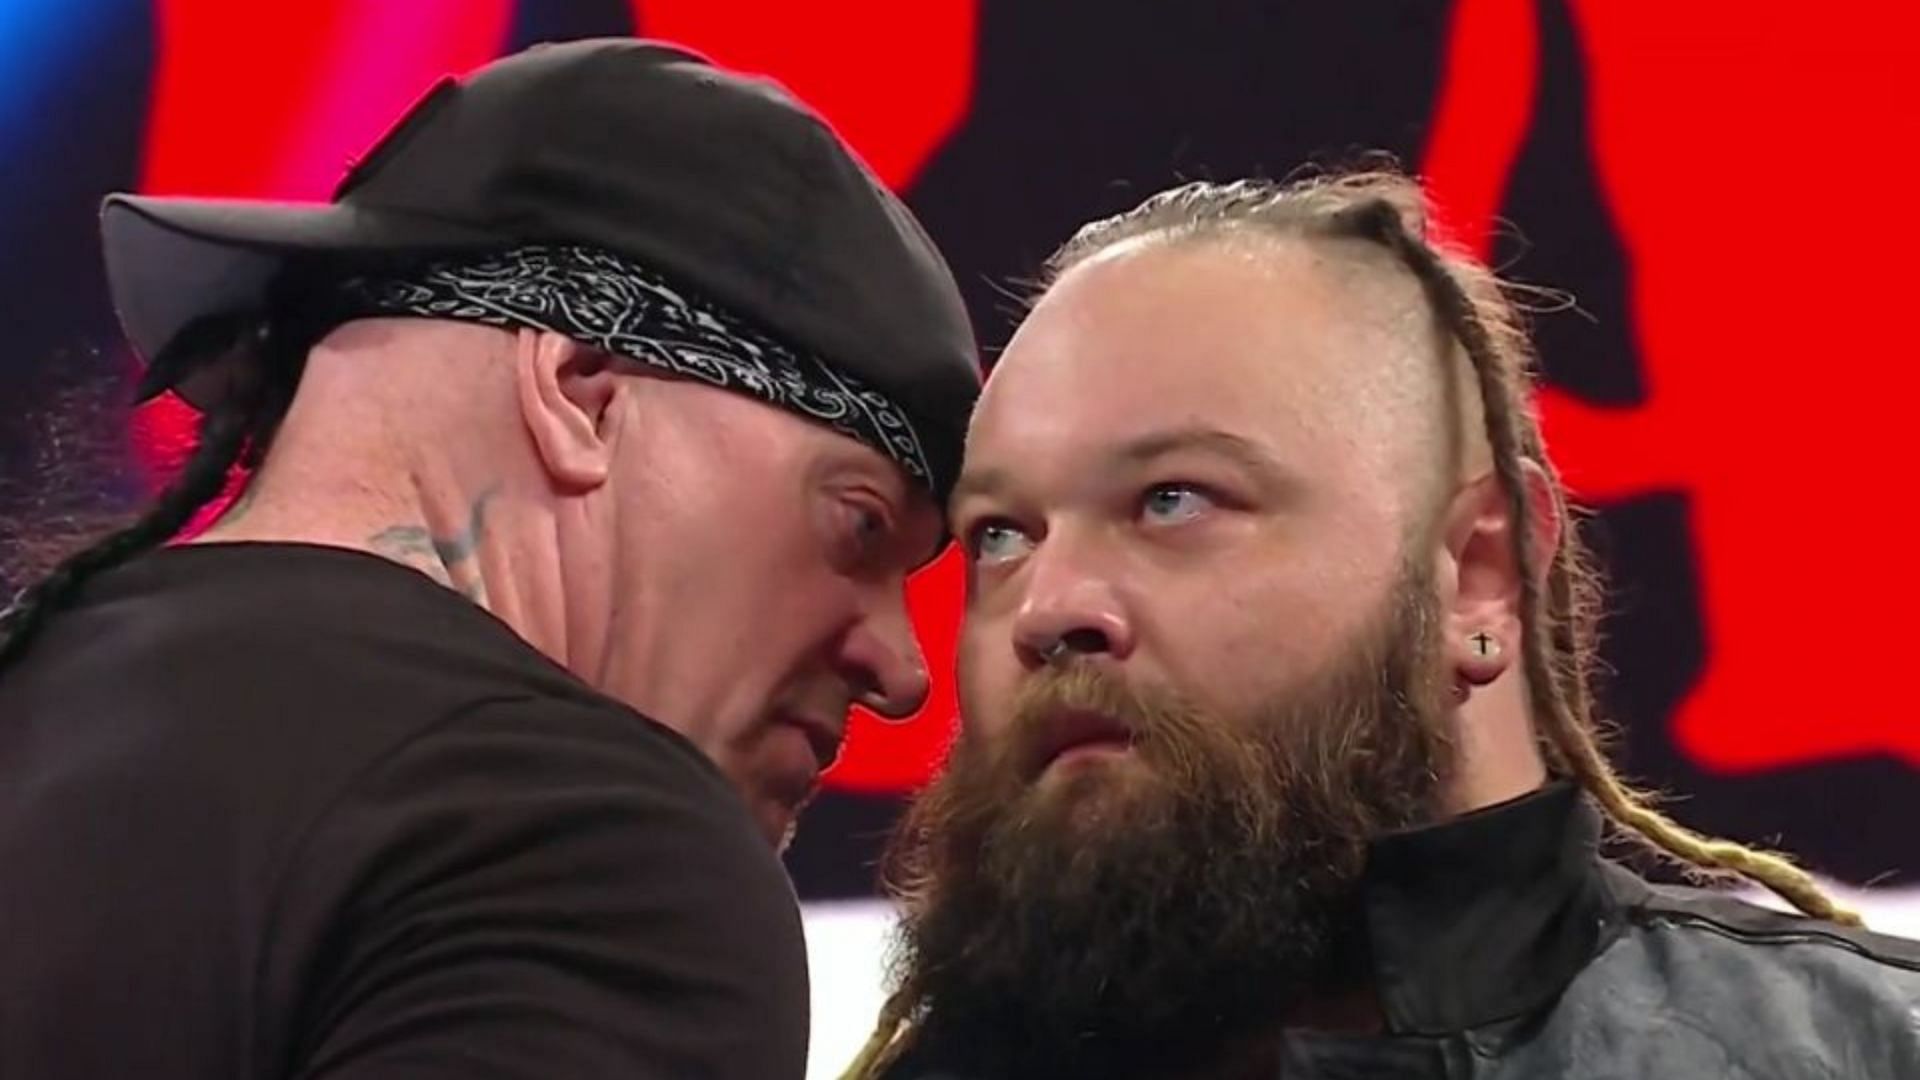 WWE Hall of Famer The Undertaker with Bray Wyatt